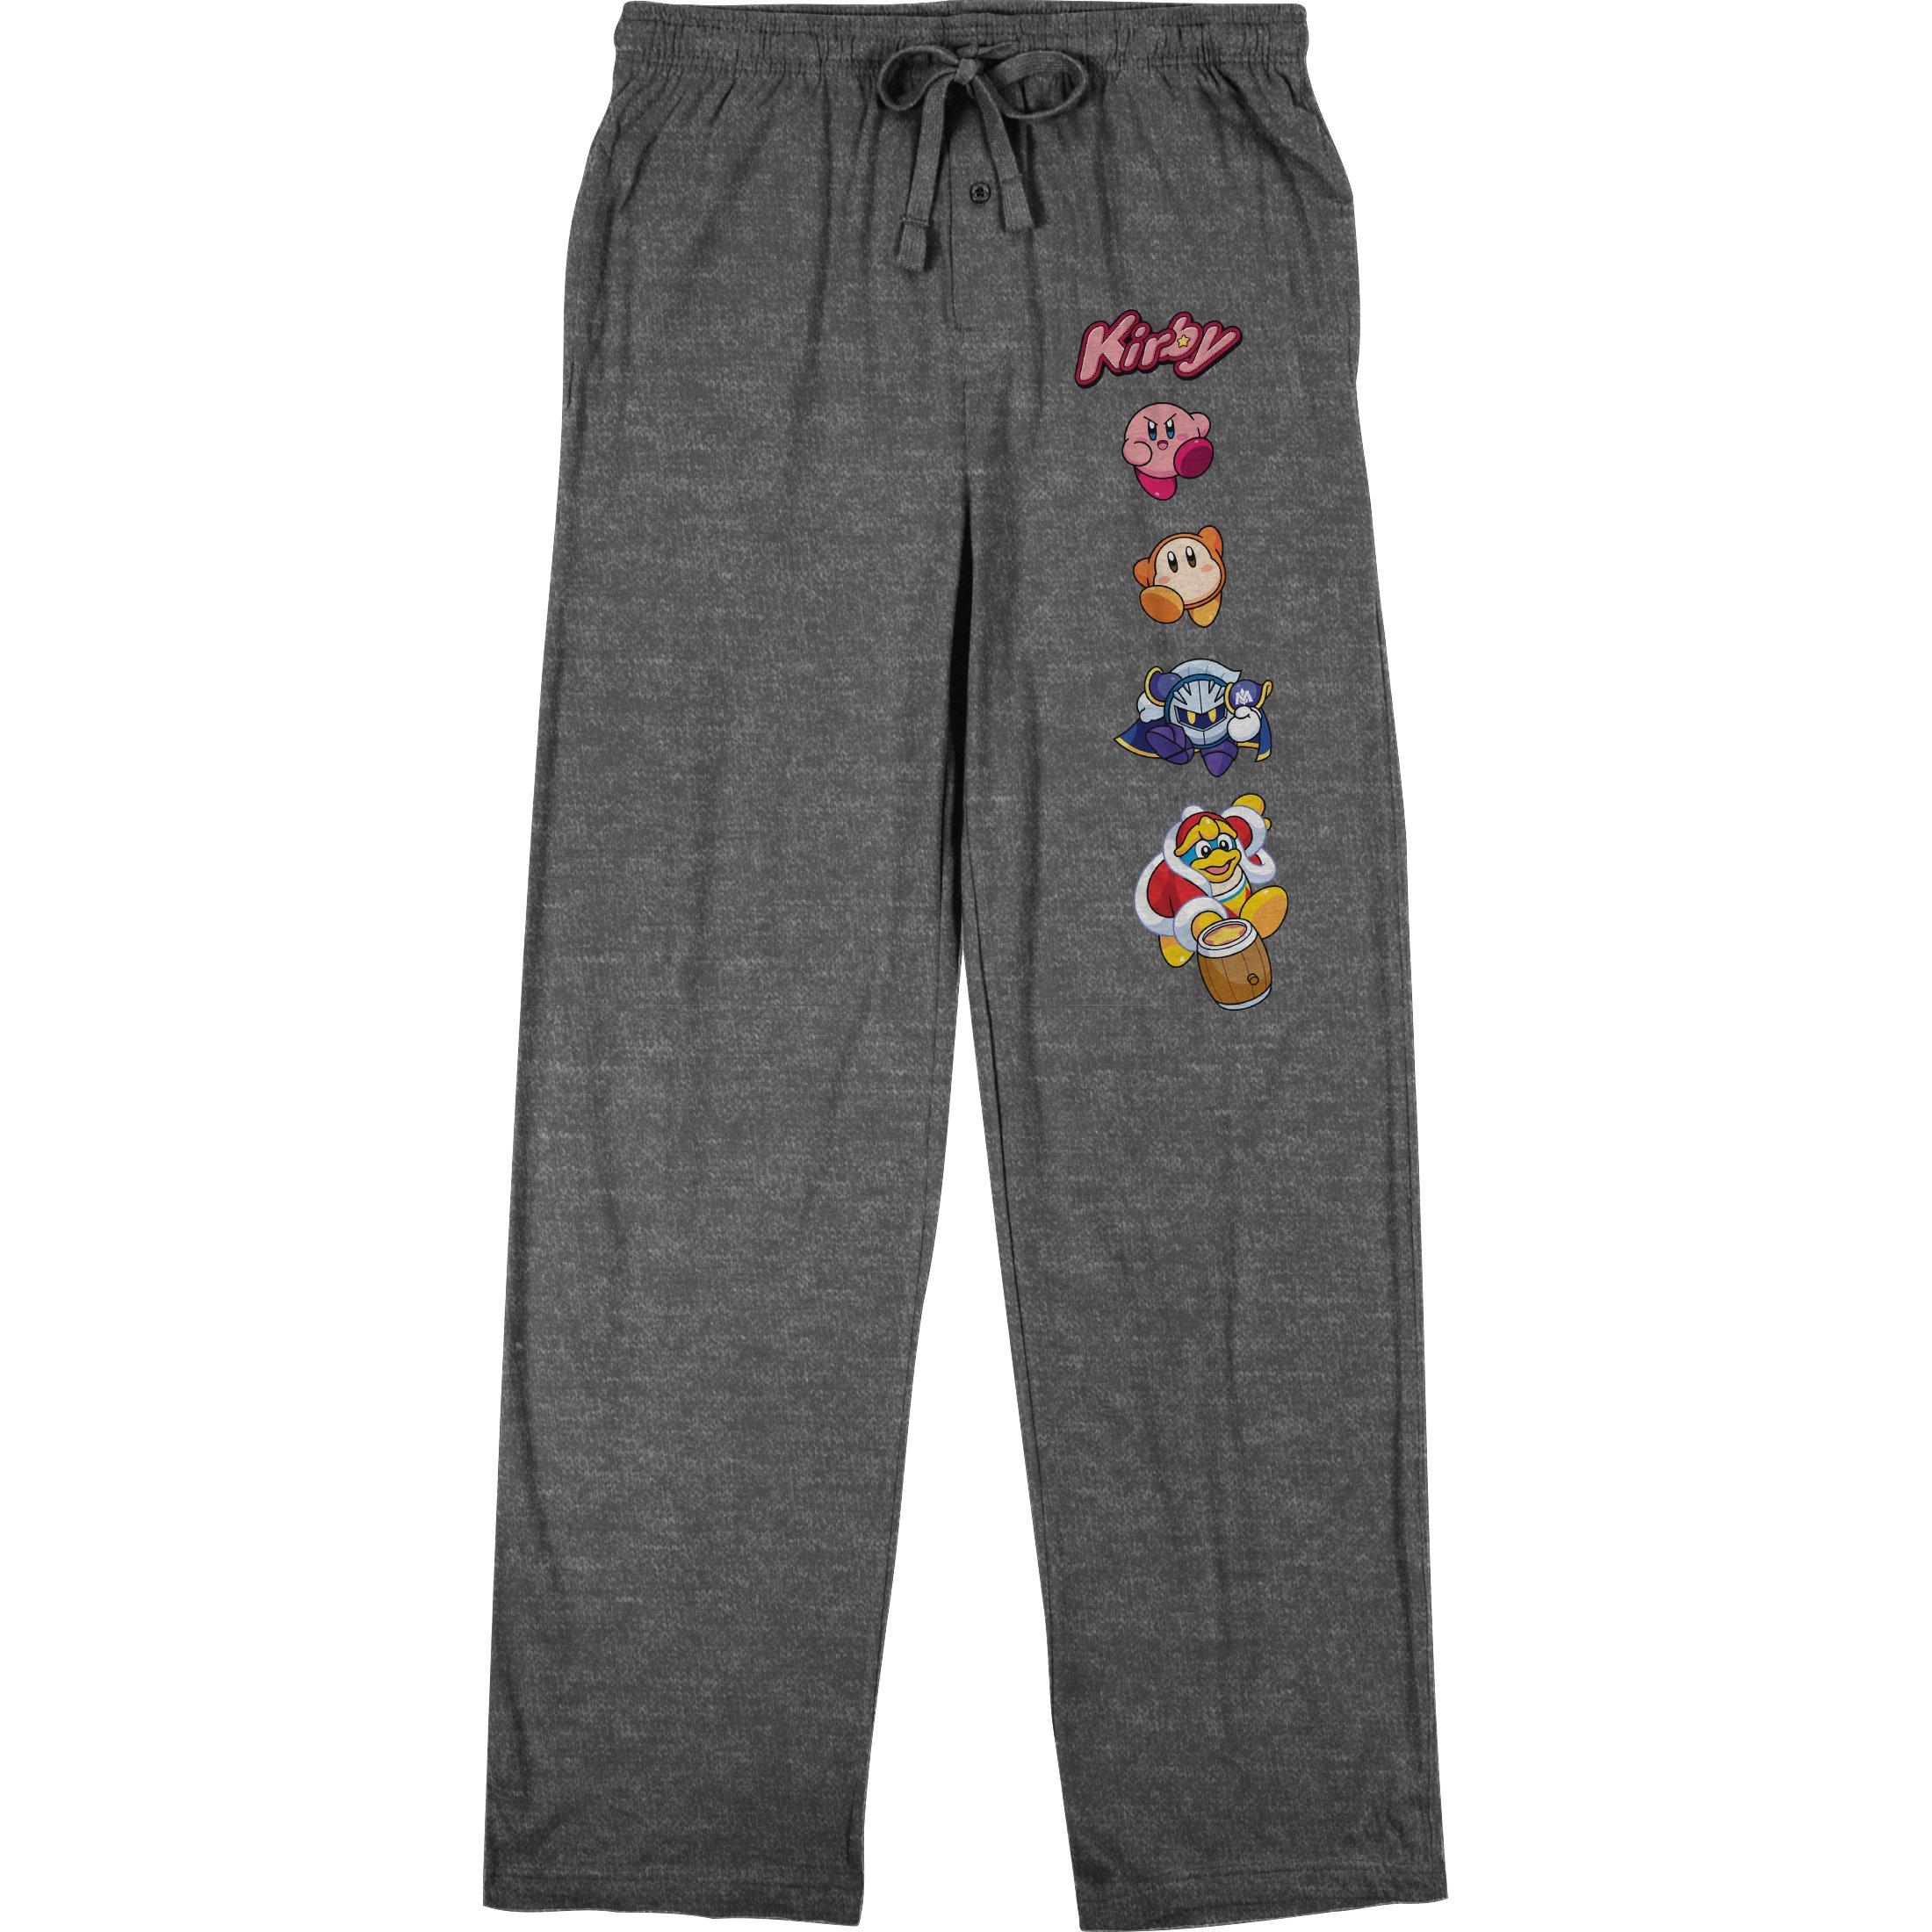 Alfani Knit Super Soft Pajama Pants Pearl Grey Heather – CheapUndies